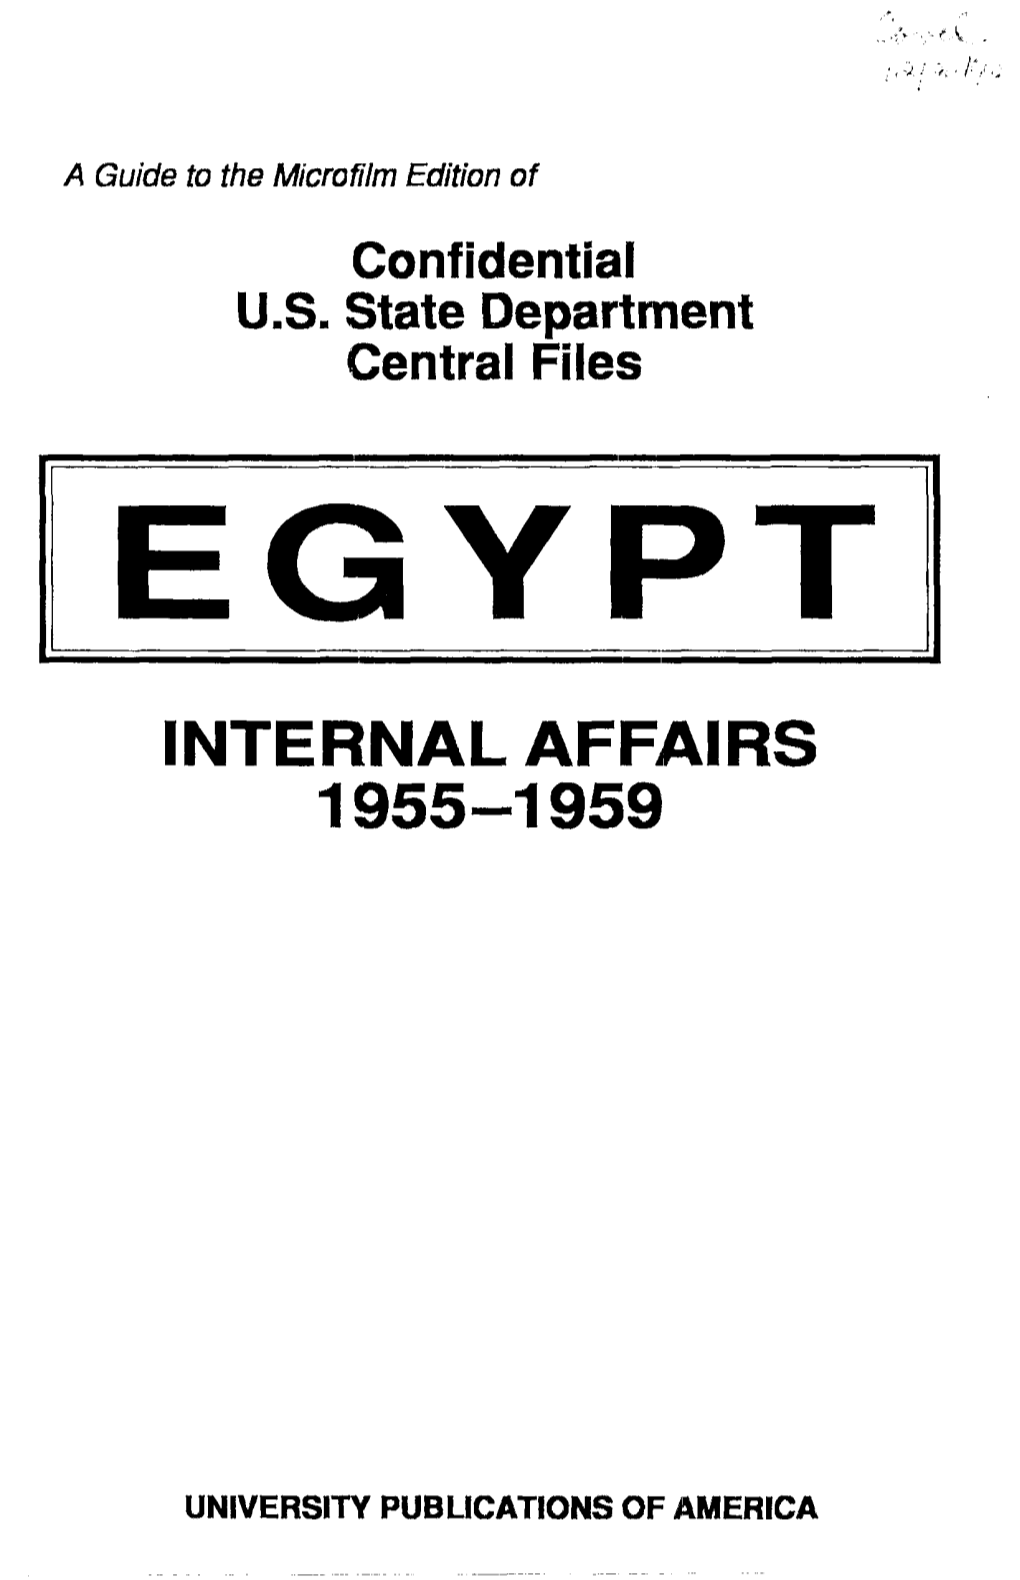 Internal Affairs 1955-1959